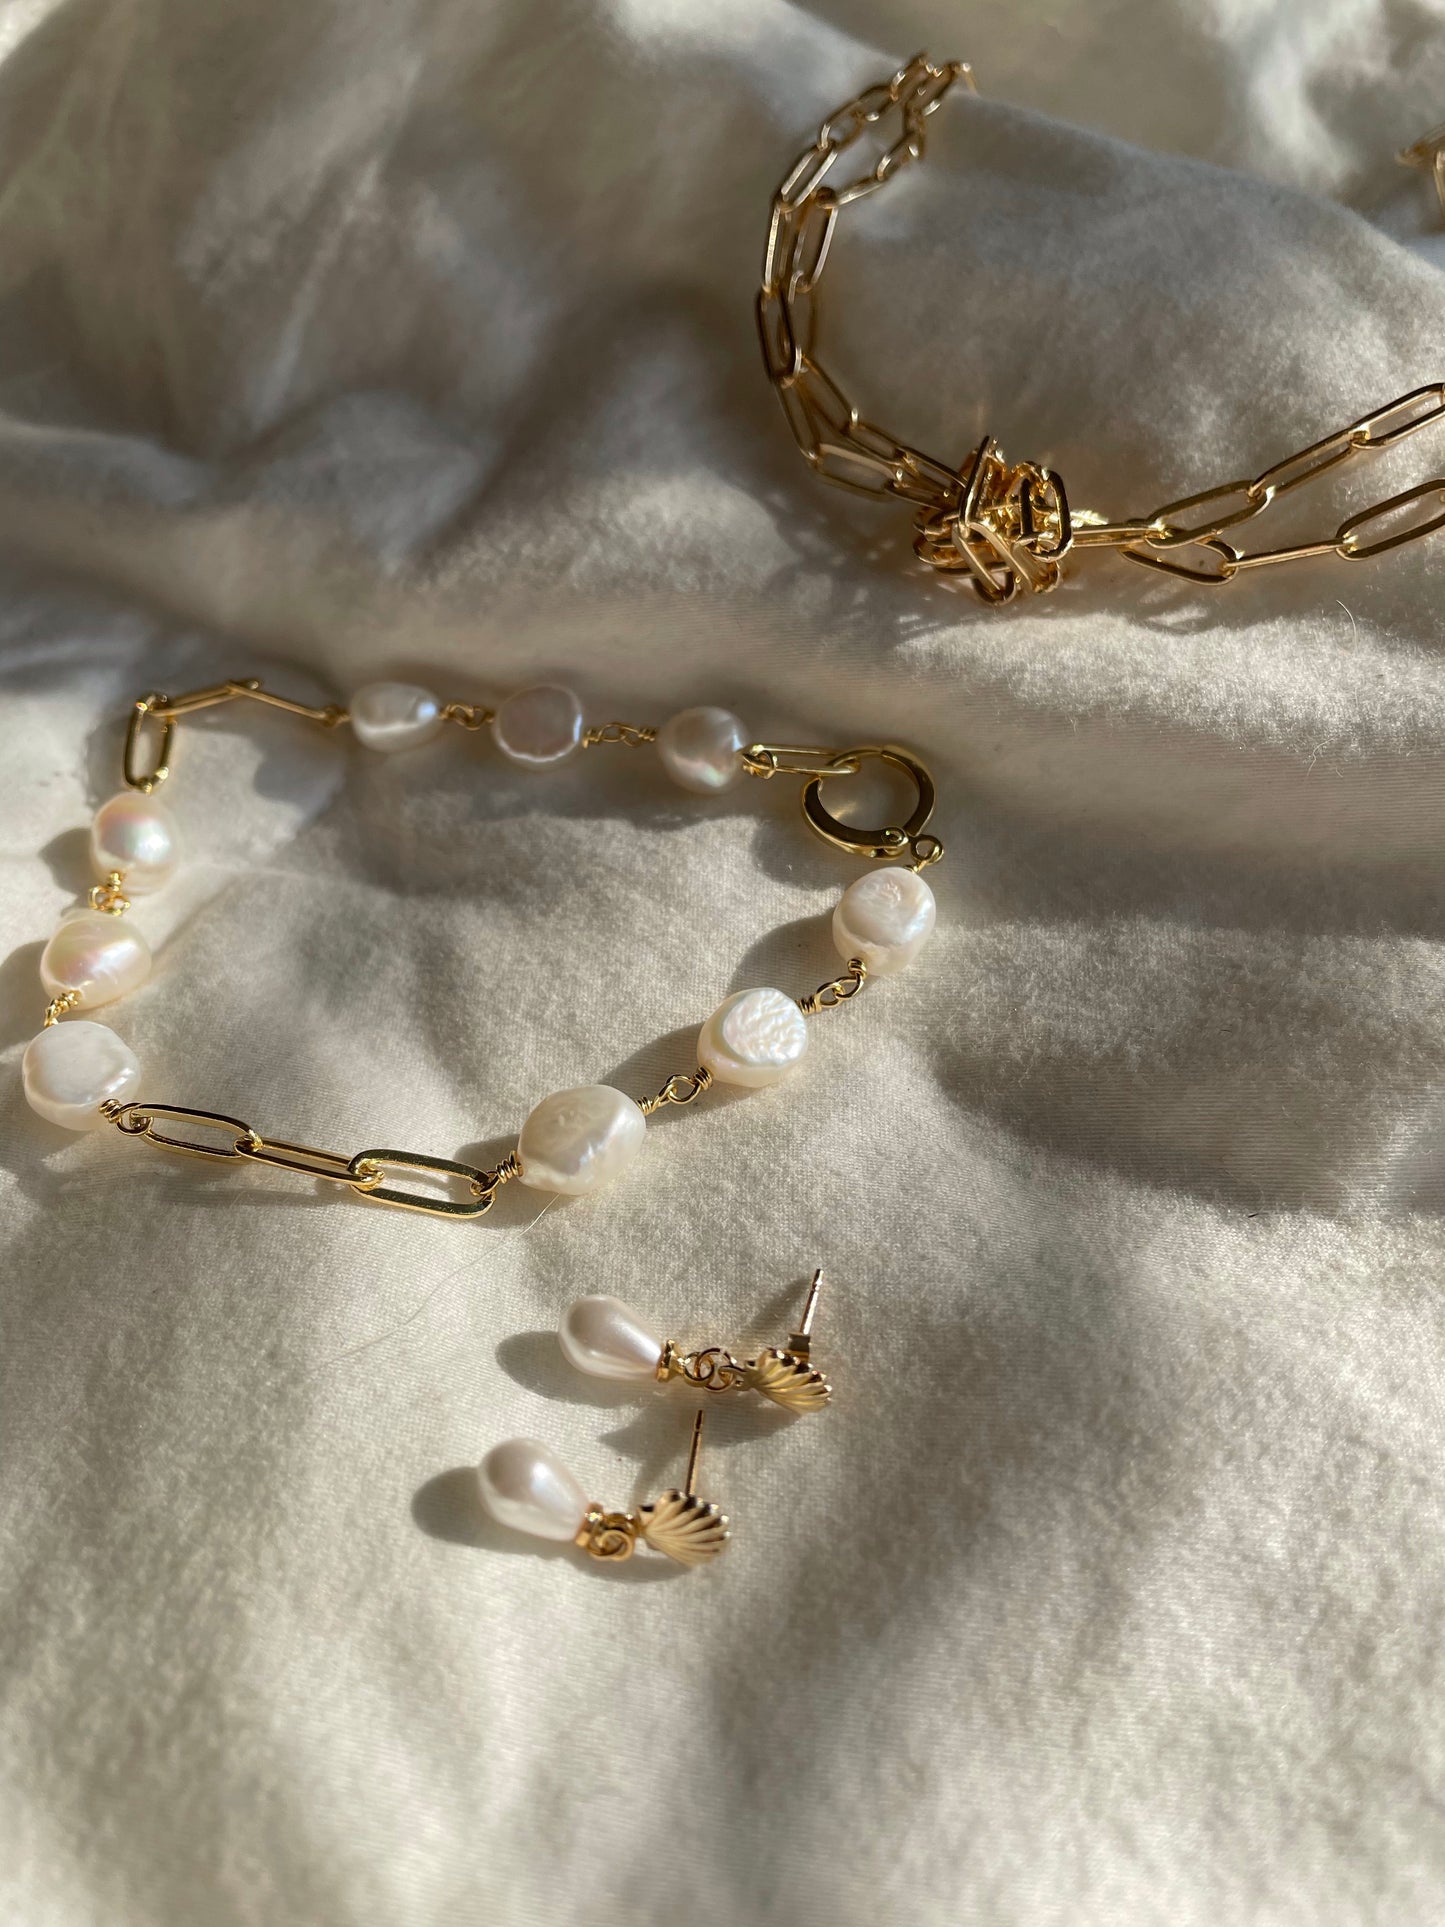 Beyond The Sea Seashell Pearls. AuORA Jewelry SeaShell Pearls